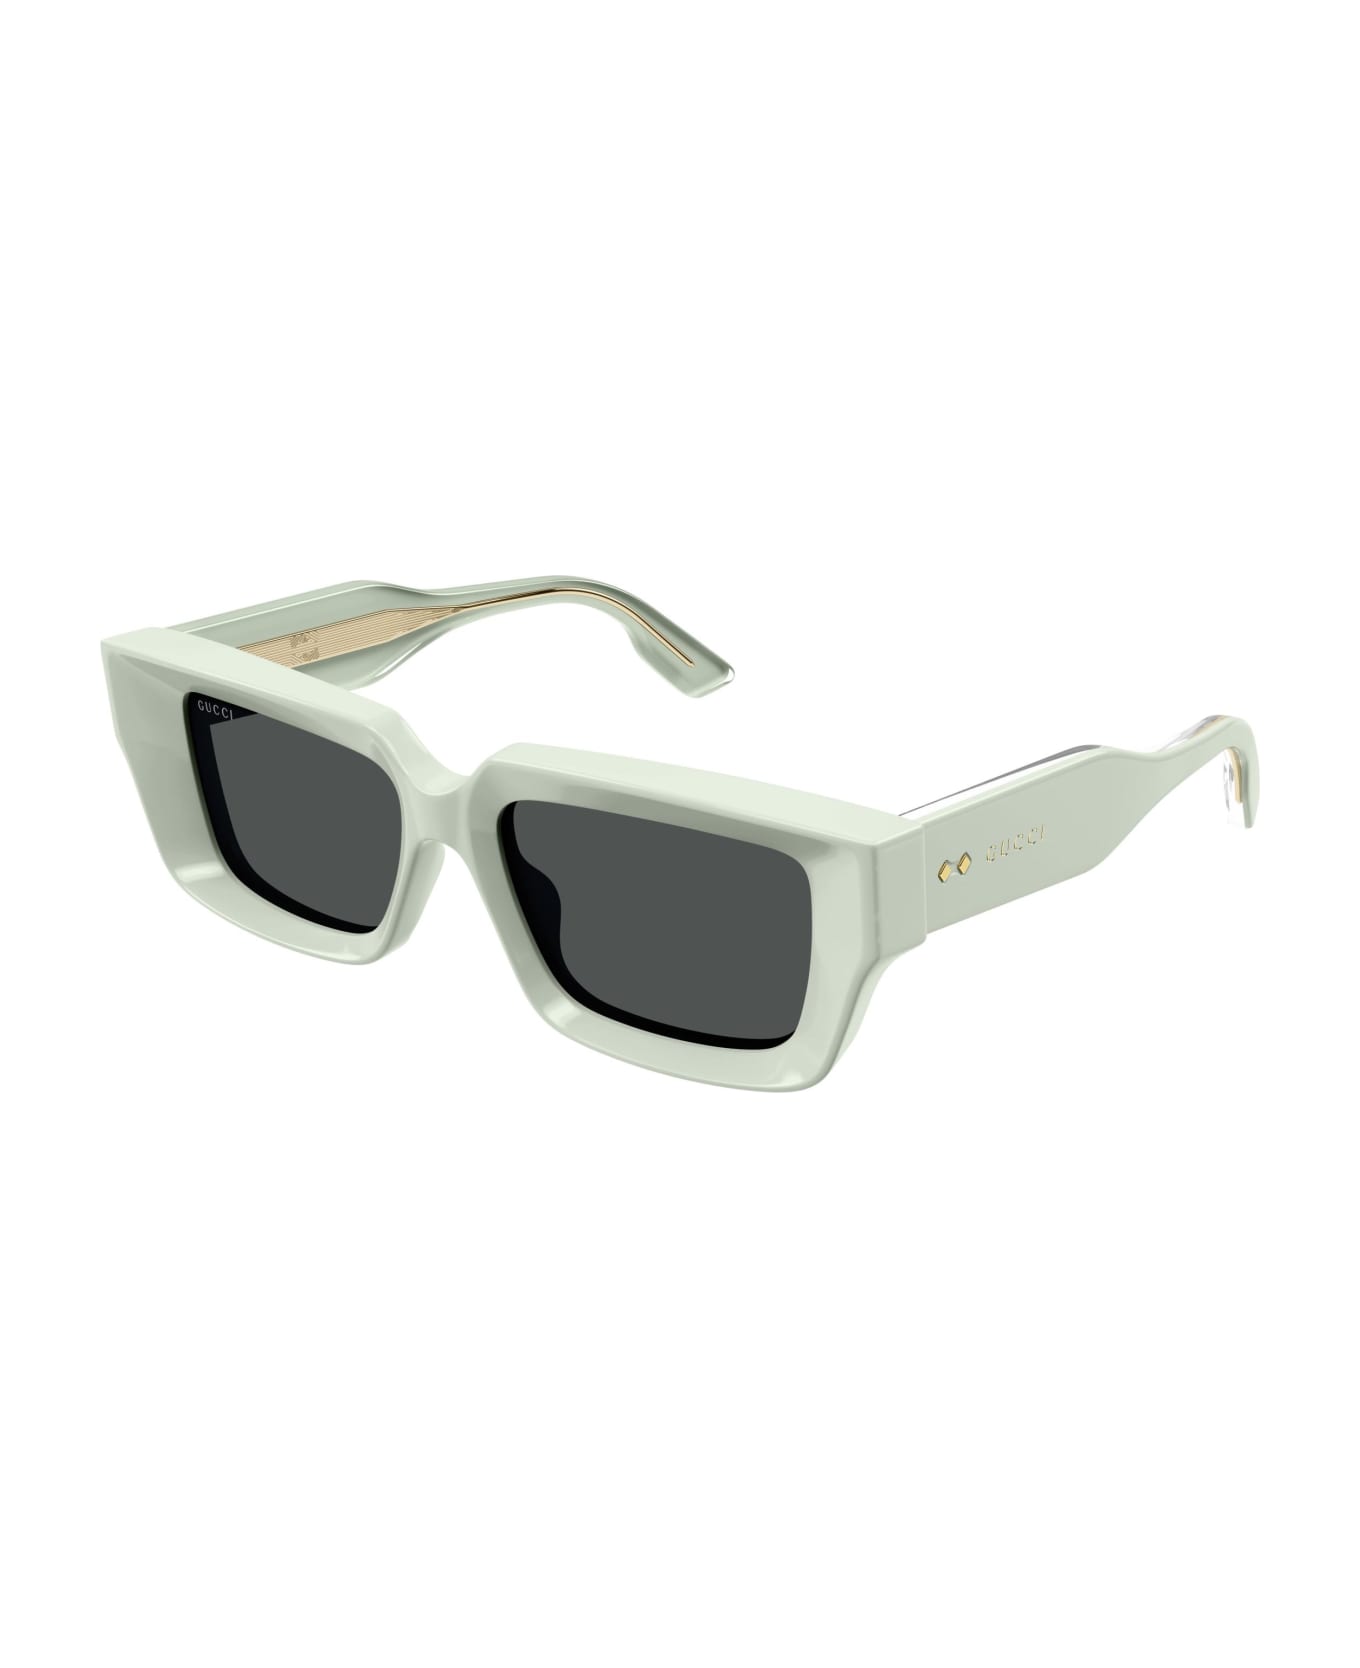 Gucci Eyewear Sunglasses - Verde/Grigio